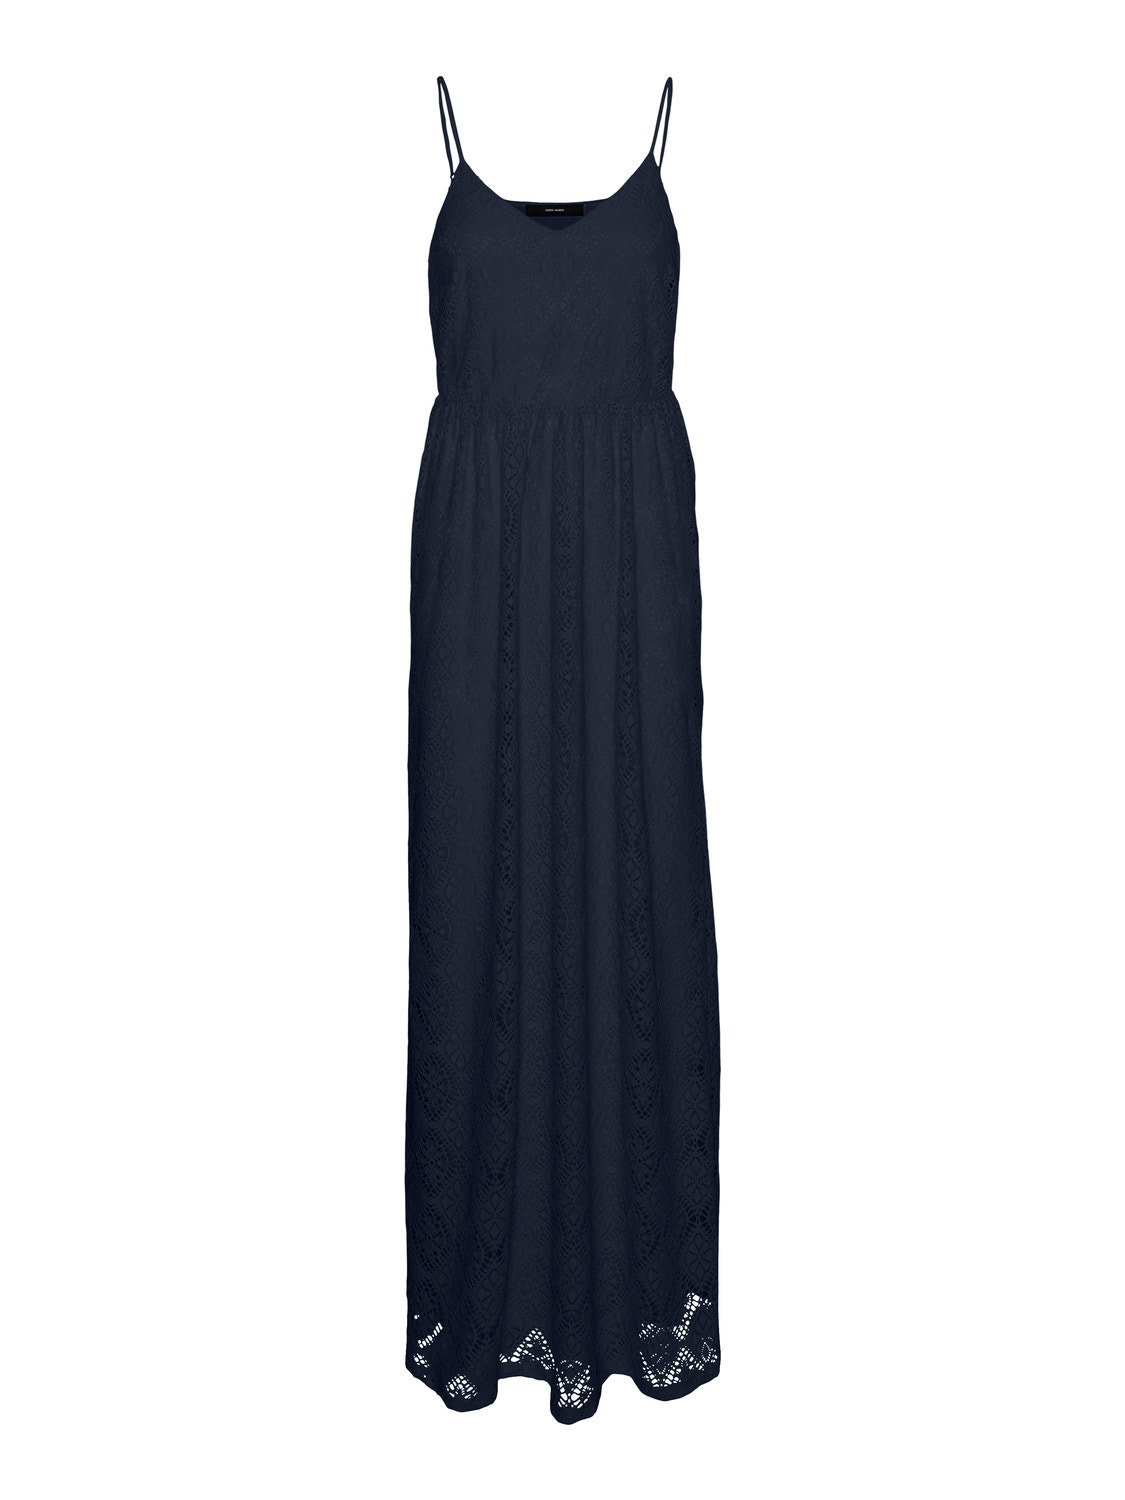 VMMAYA Long dress with 40% Vero discount! Moda® 